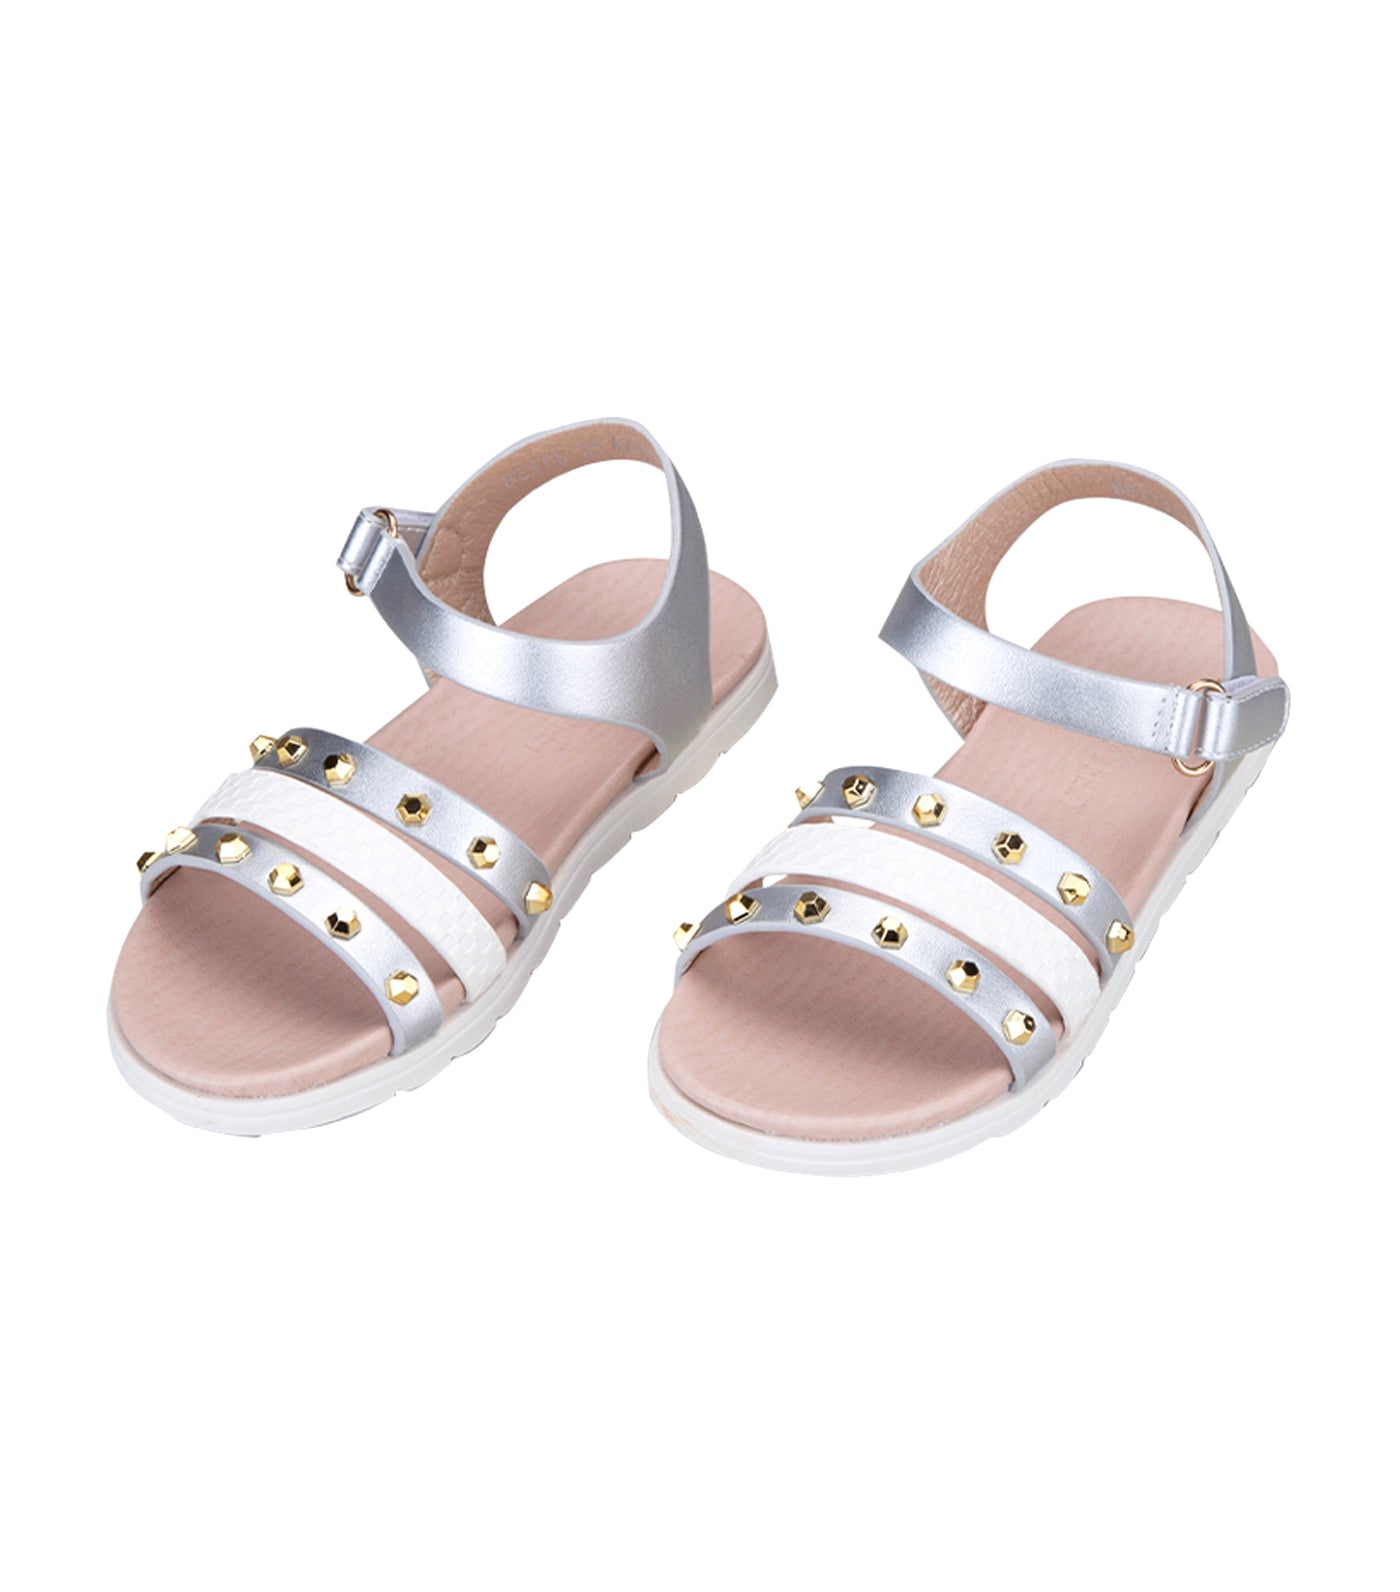 Betts Kids Sandals for Girls - Silver